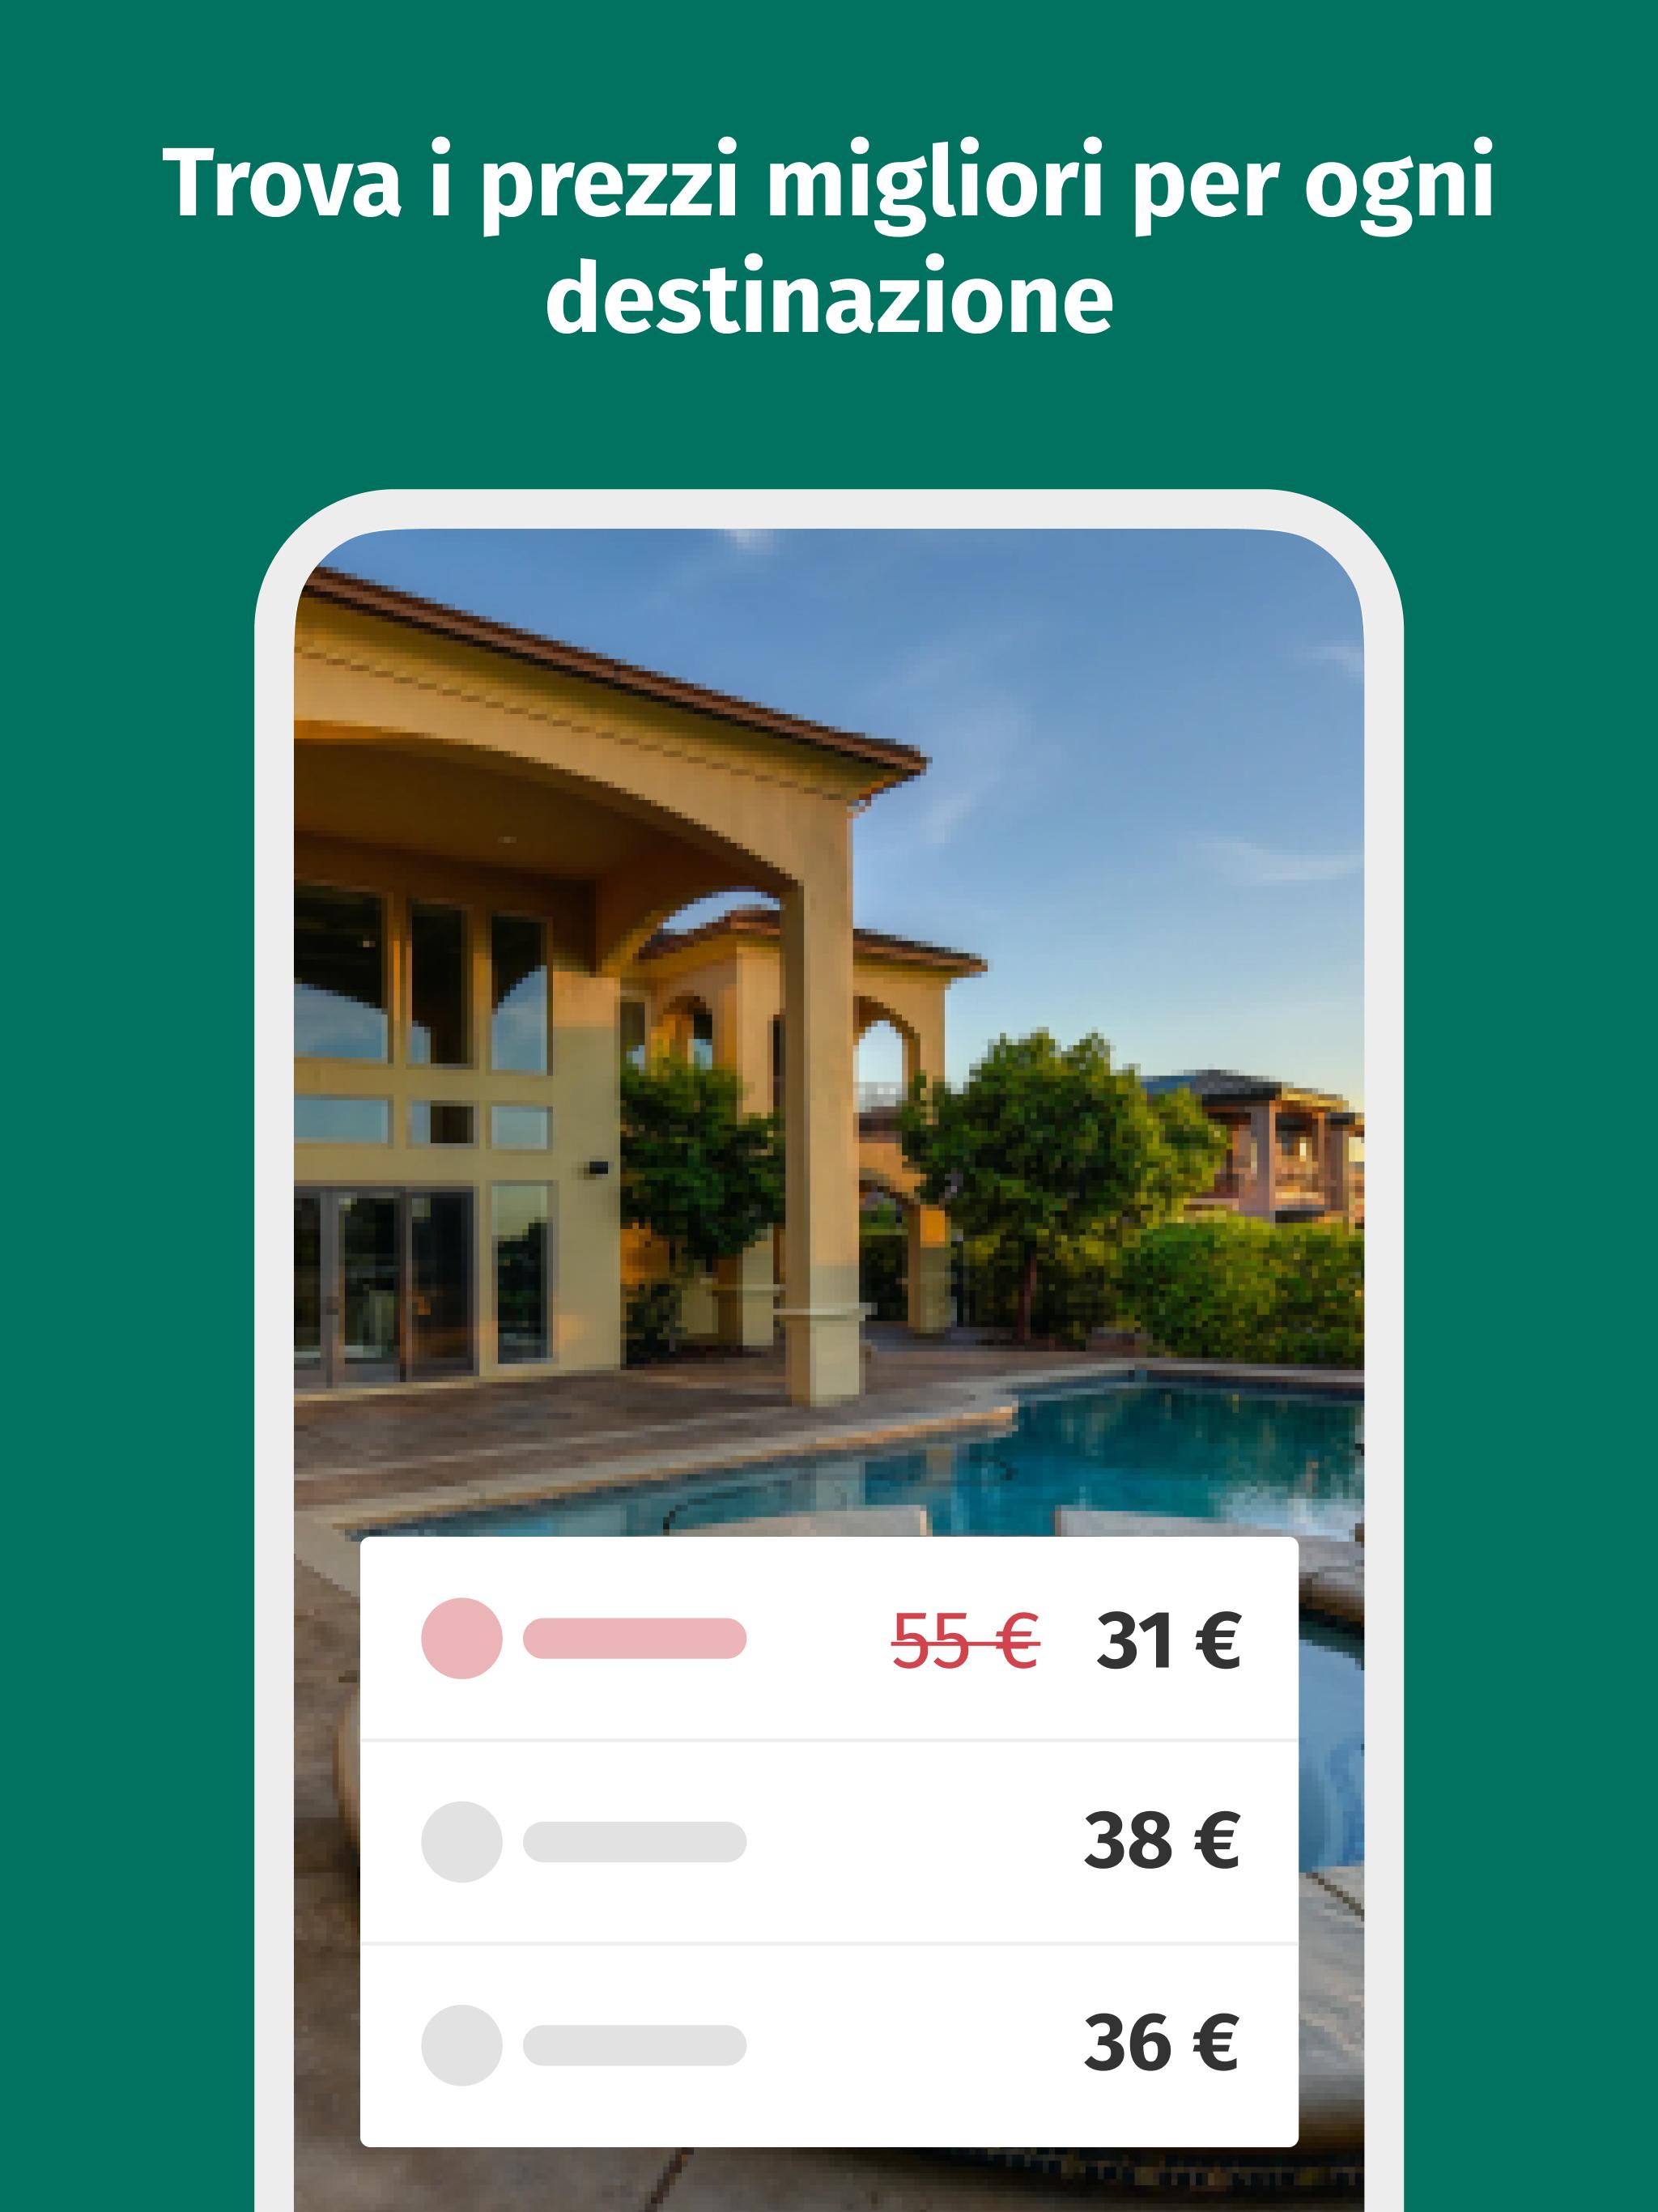 CaseVacanza.it Cerca case vacanza in affitto 1.2.0 Screenshot 17